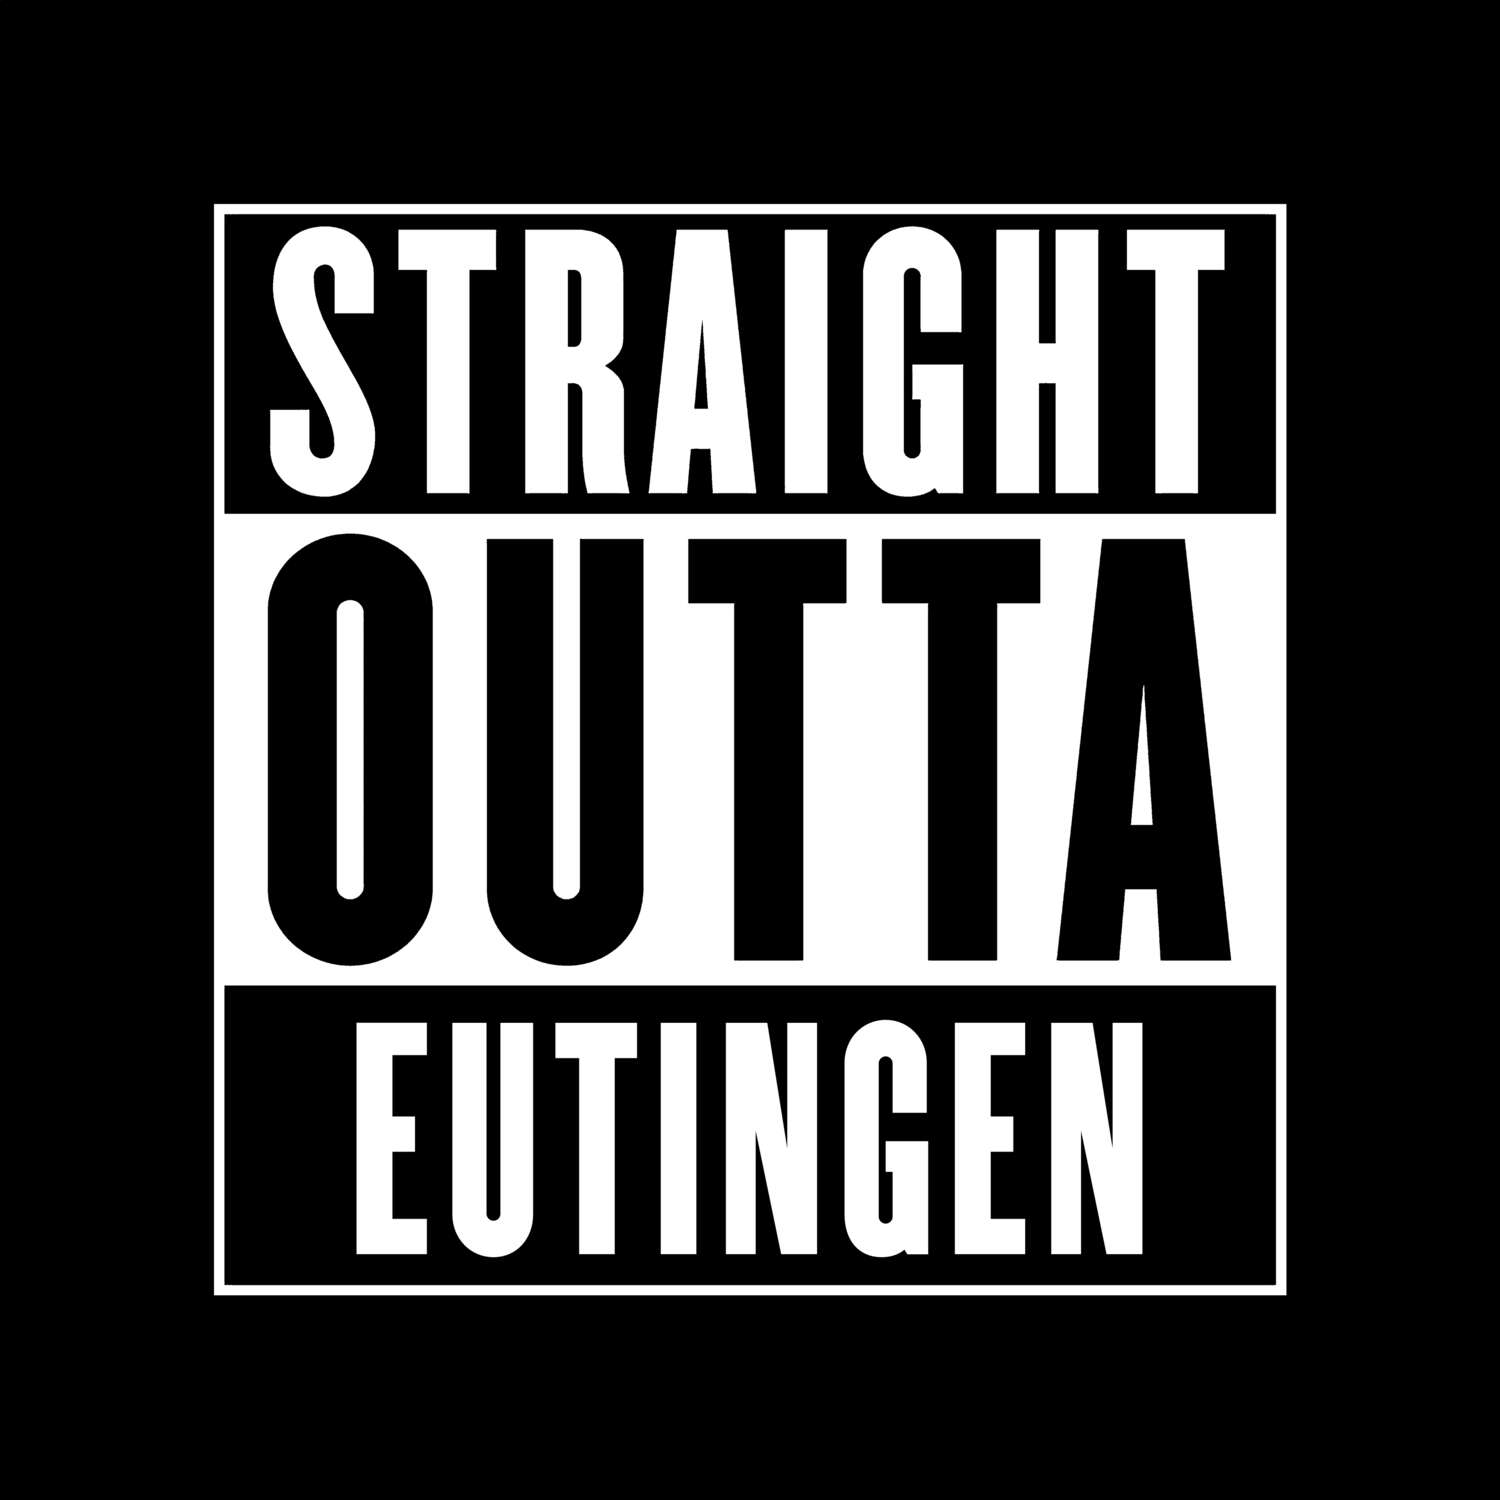 Eutingen T-Shirt »Straight Outta«